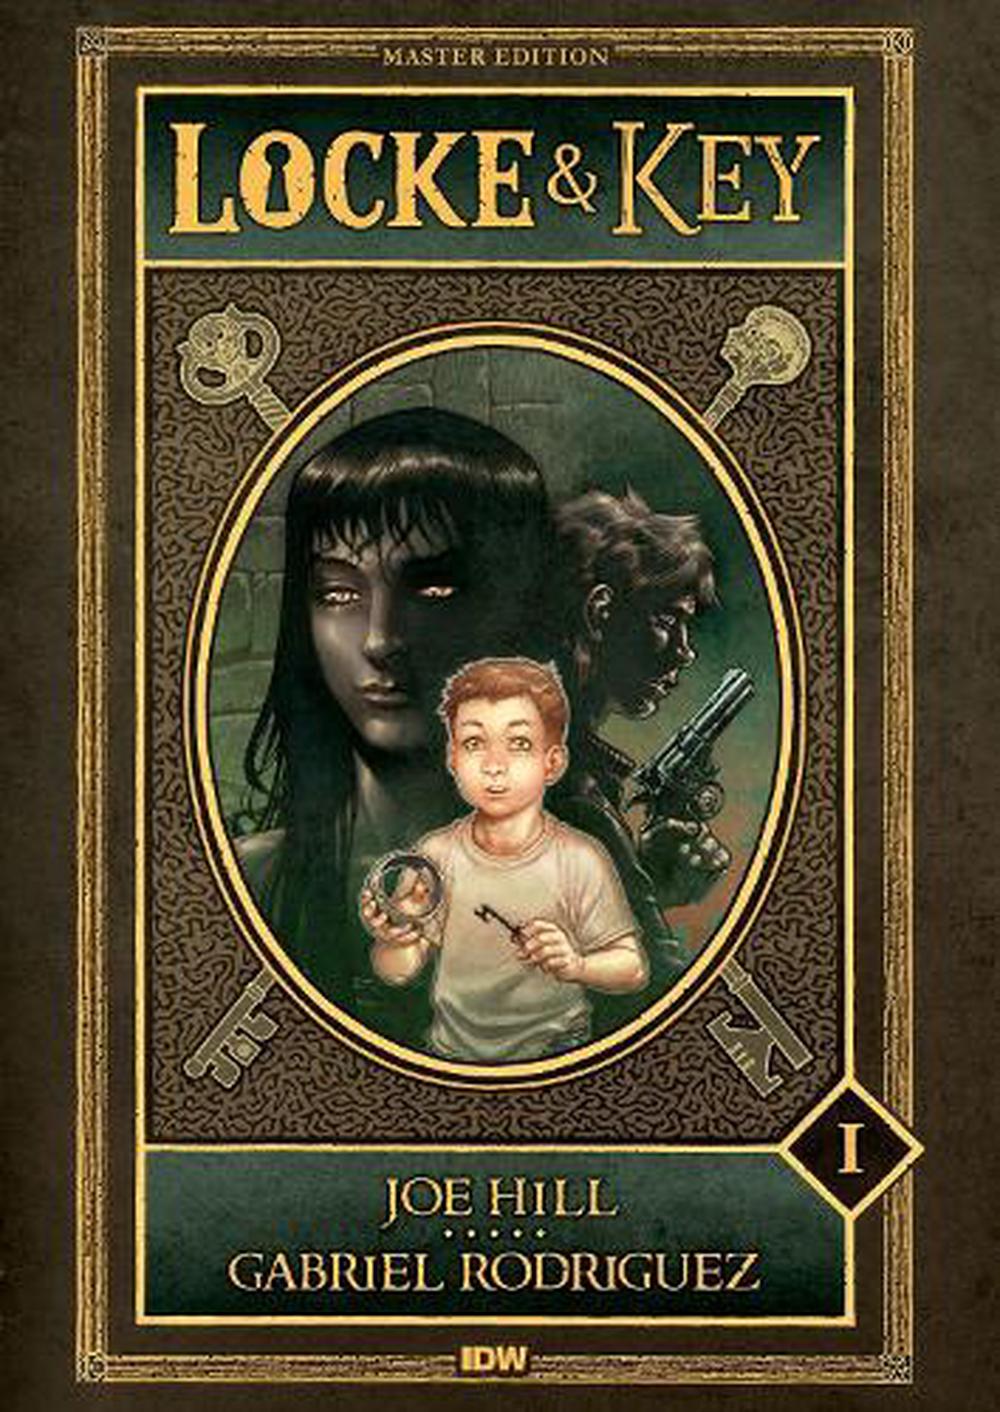 Locke & Key, Vol. 4 by Joe Hill